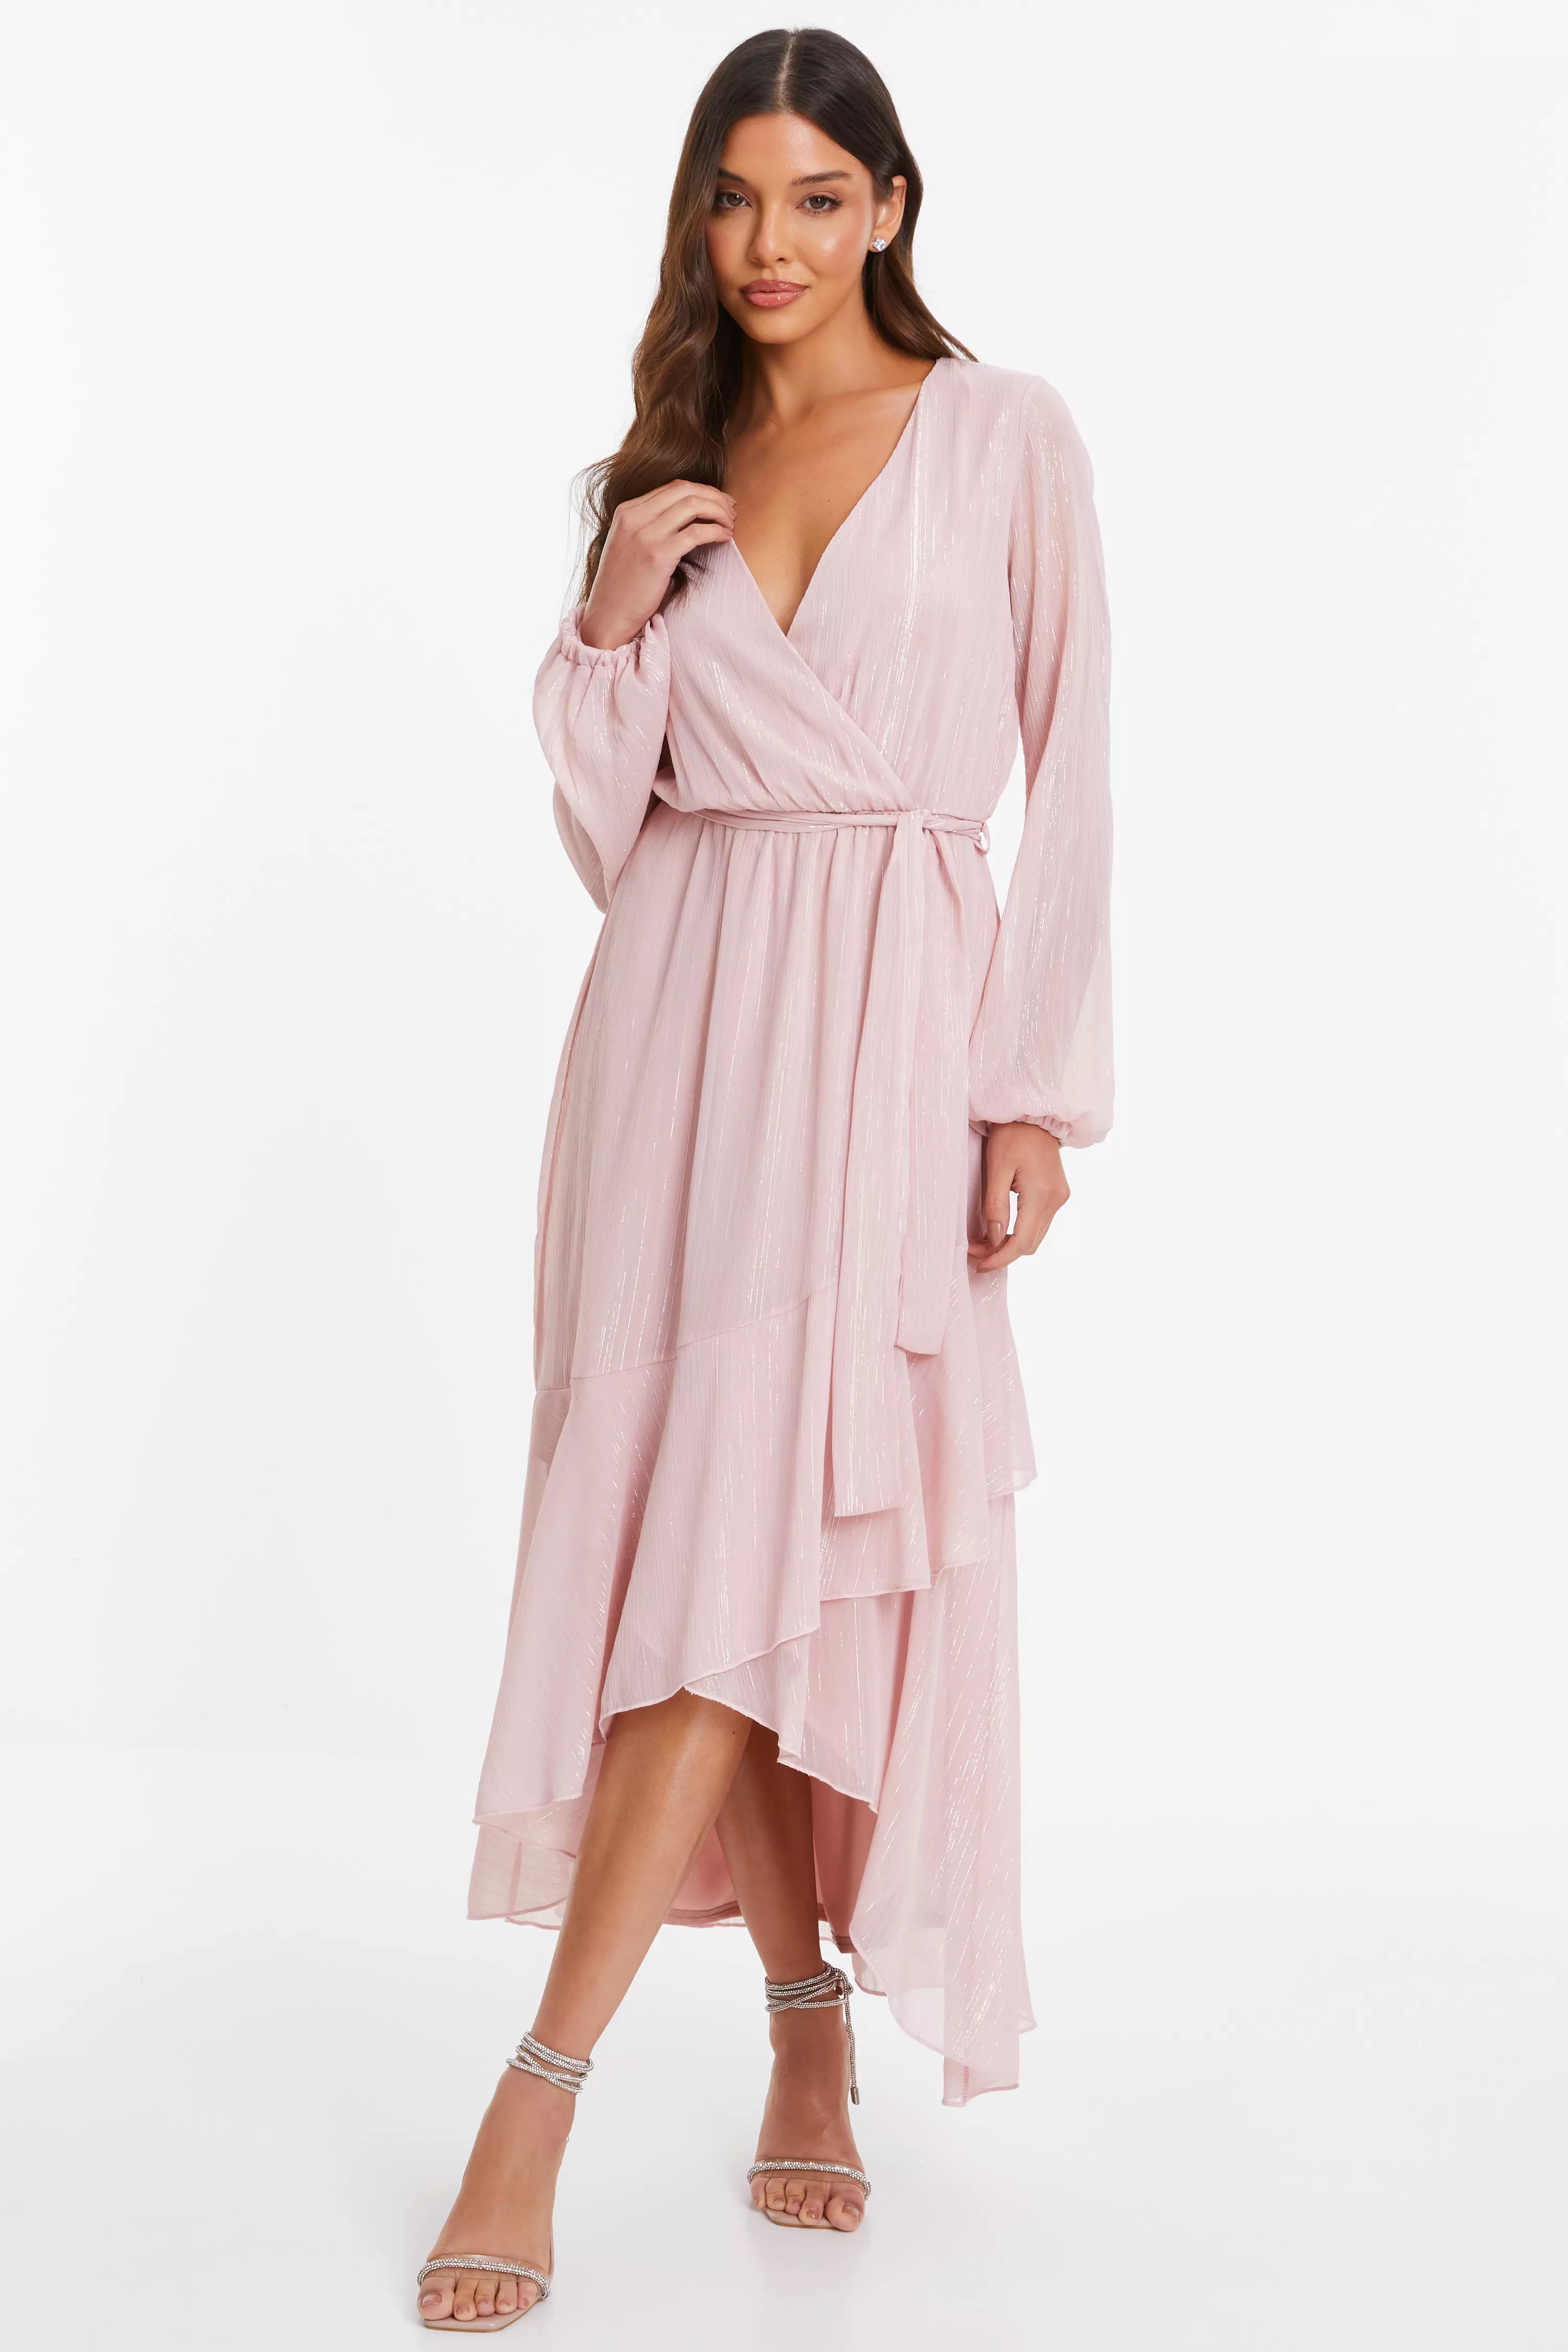 Pale Pink Chiffon Wrap Midi Dress